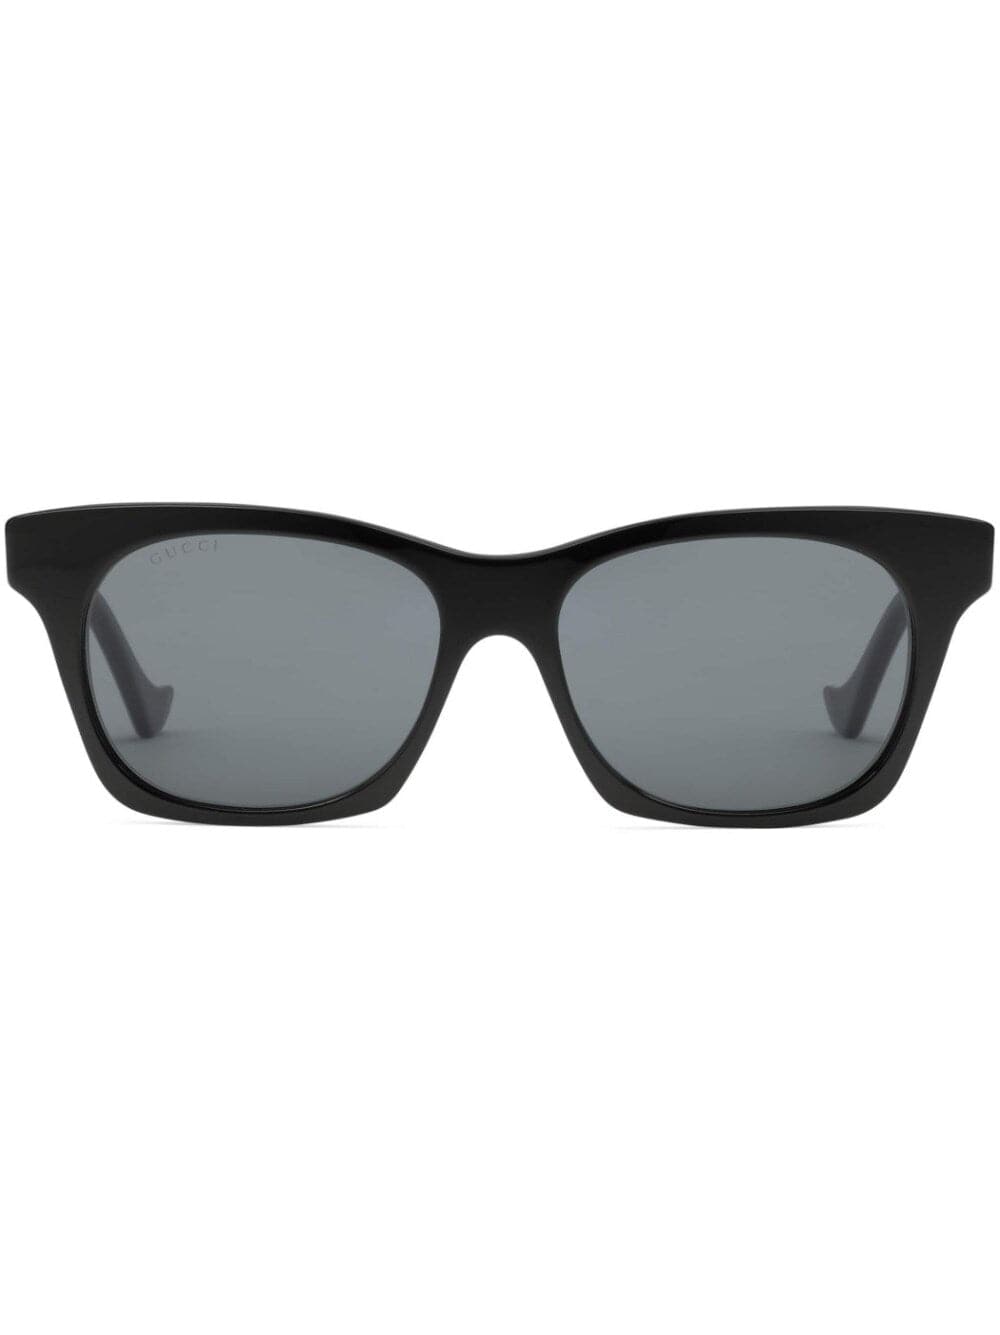 Gucci, Rectangular Frame Sunglasses